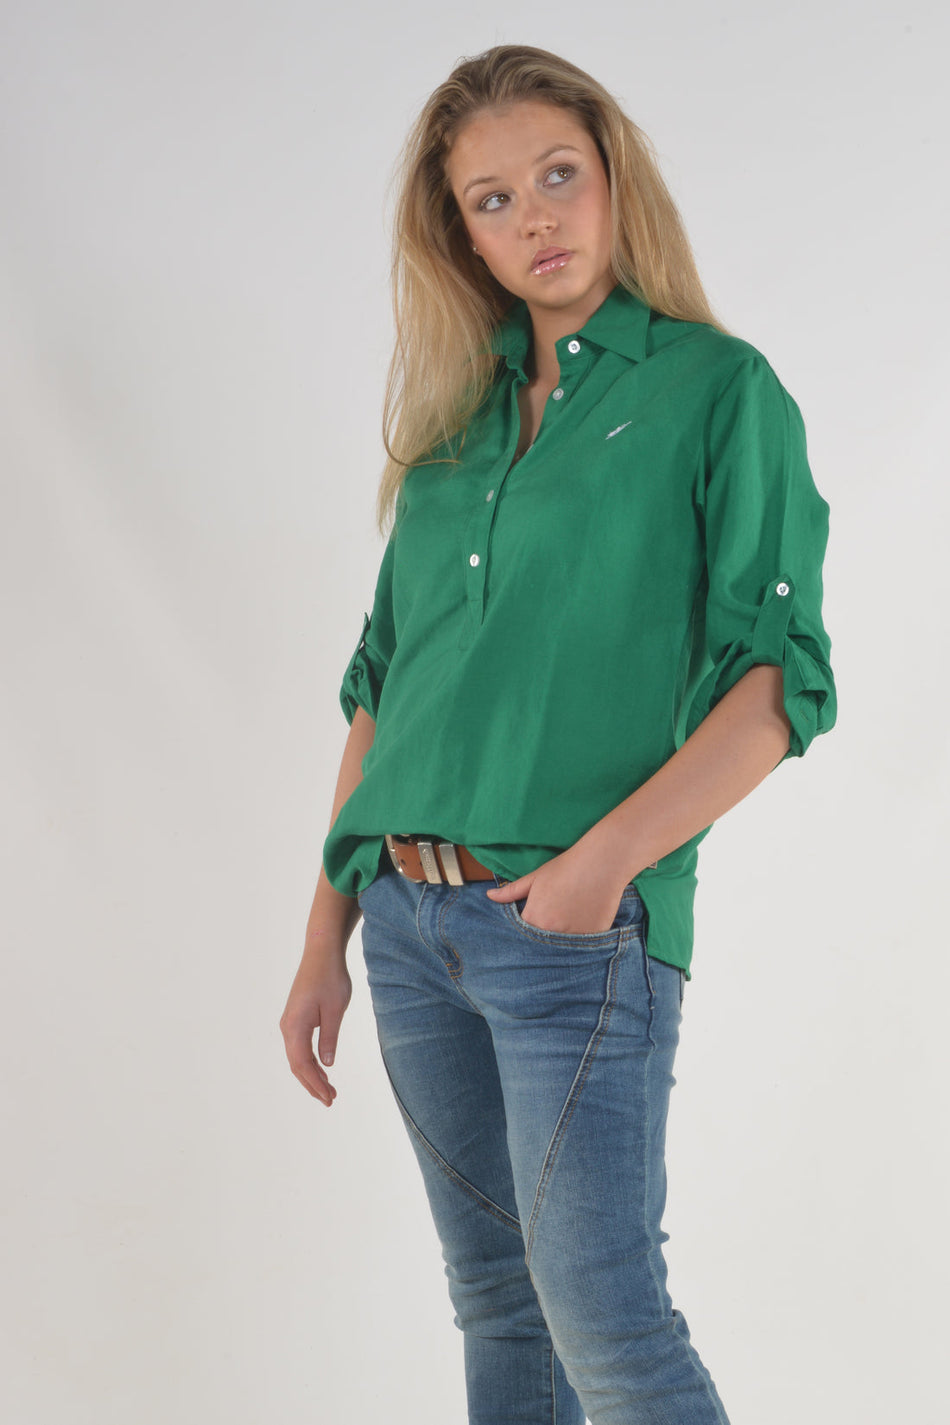 Bullrush - Ladies Linen Tab Shirt in Green